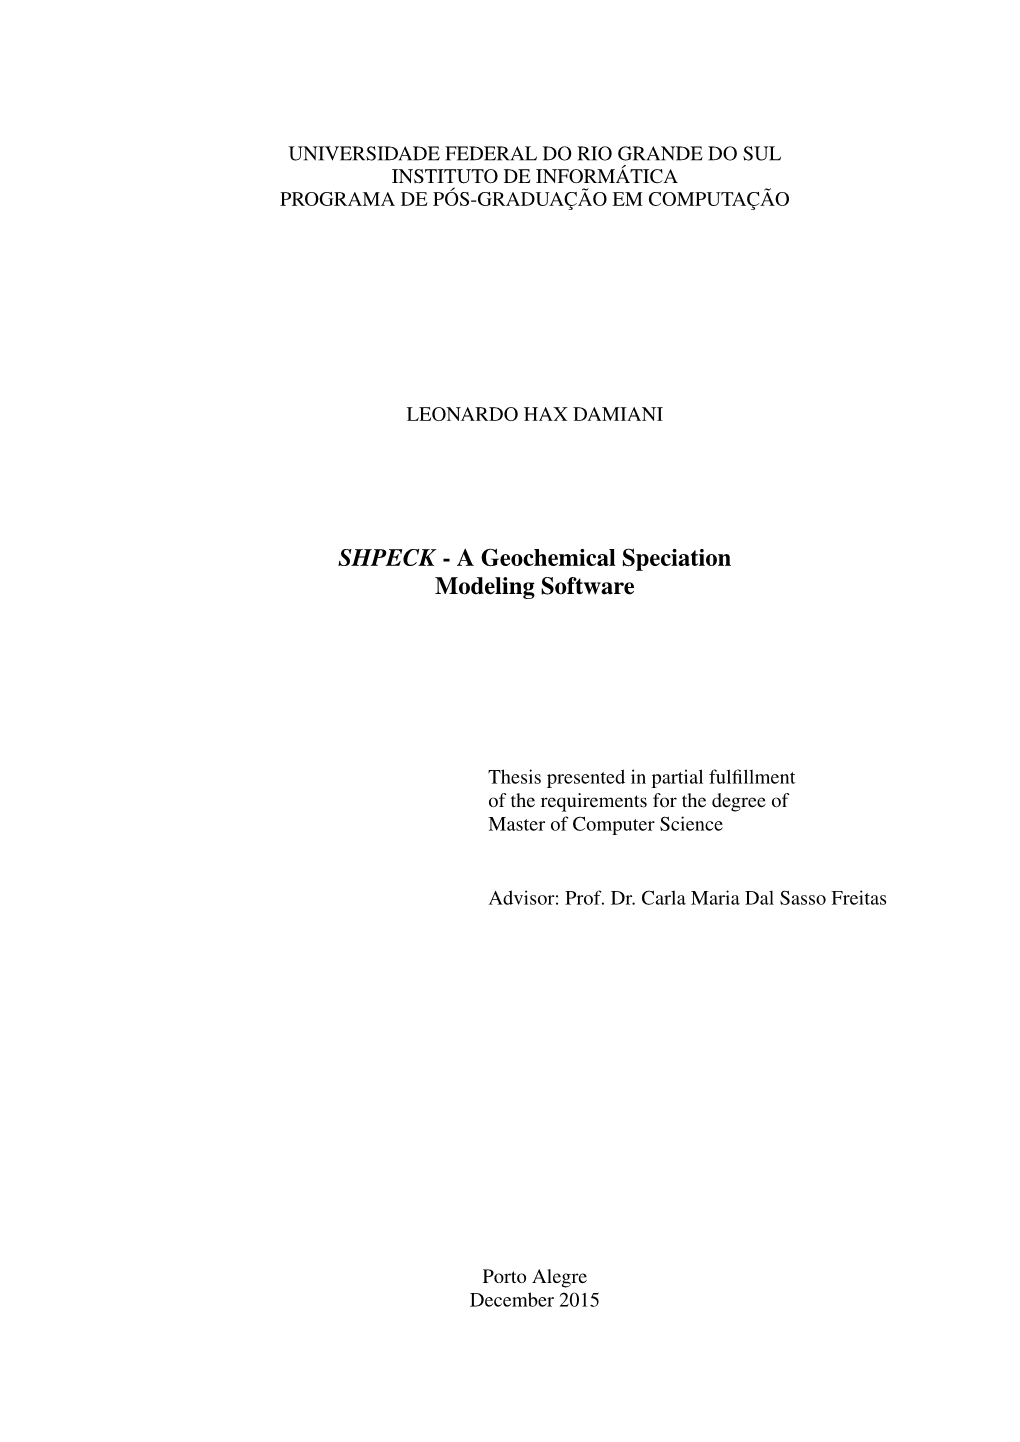 SHPECK - a Geochemical Speciation Modeling Software